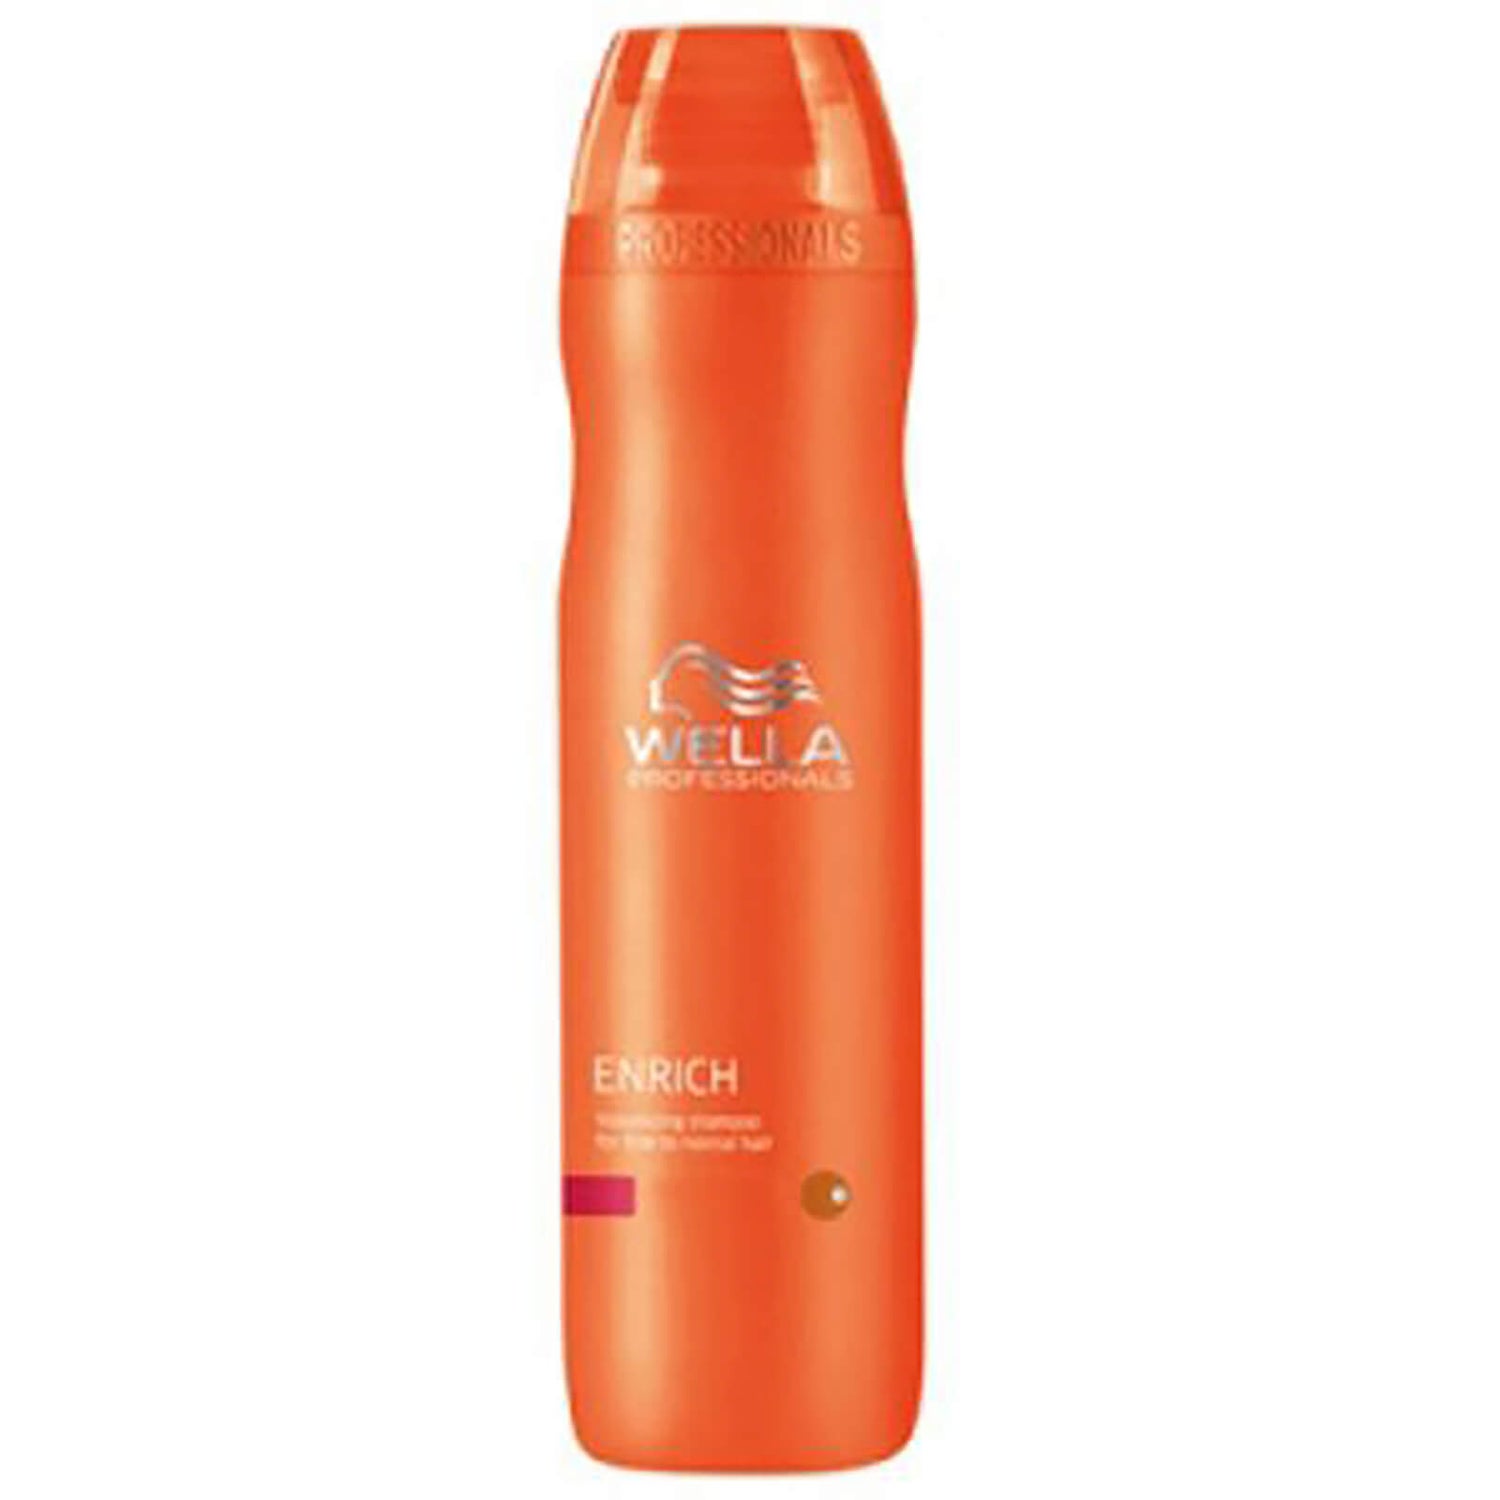 Wella Professionals Enrich Volumising Shampoo for fint til normalt hår 250 ml